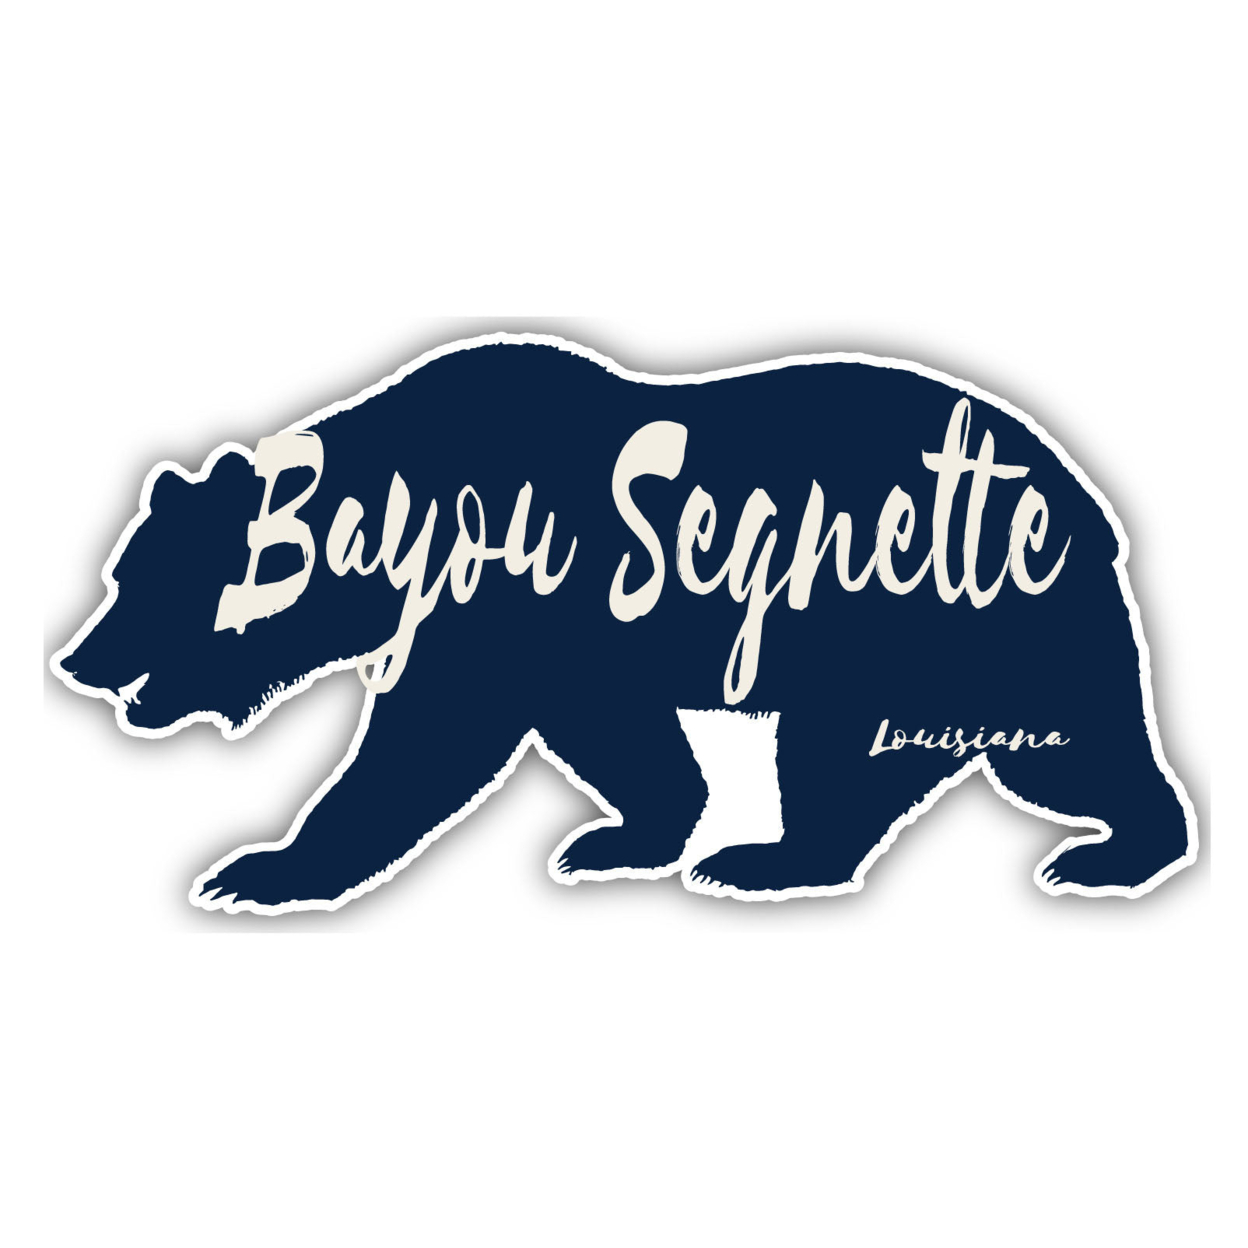 Bayou Segnette Louisiana Souvenir Decorative Stickers (Choose Theme And Size) - 4-Pack, 10-Inch, Bear